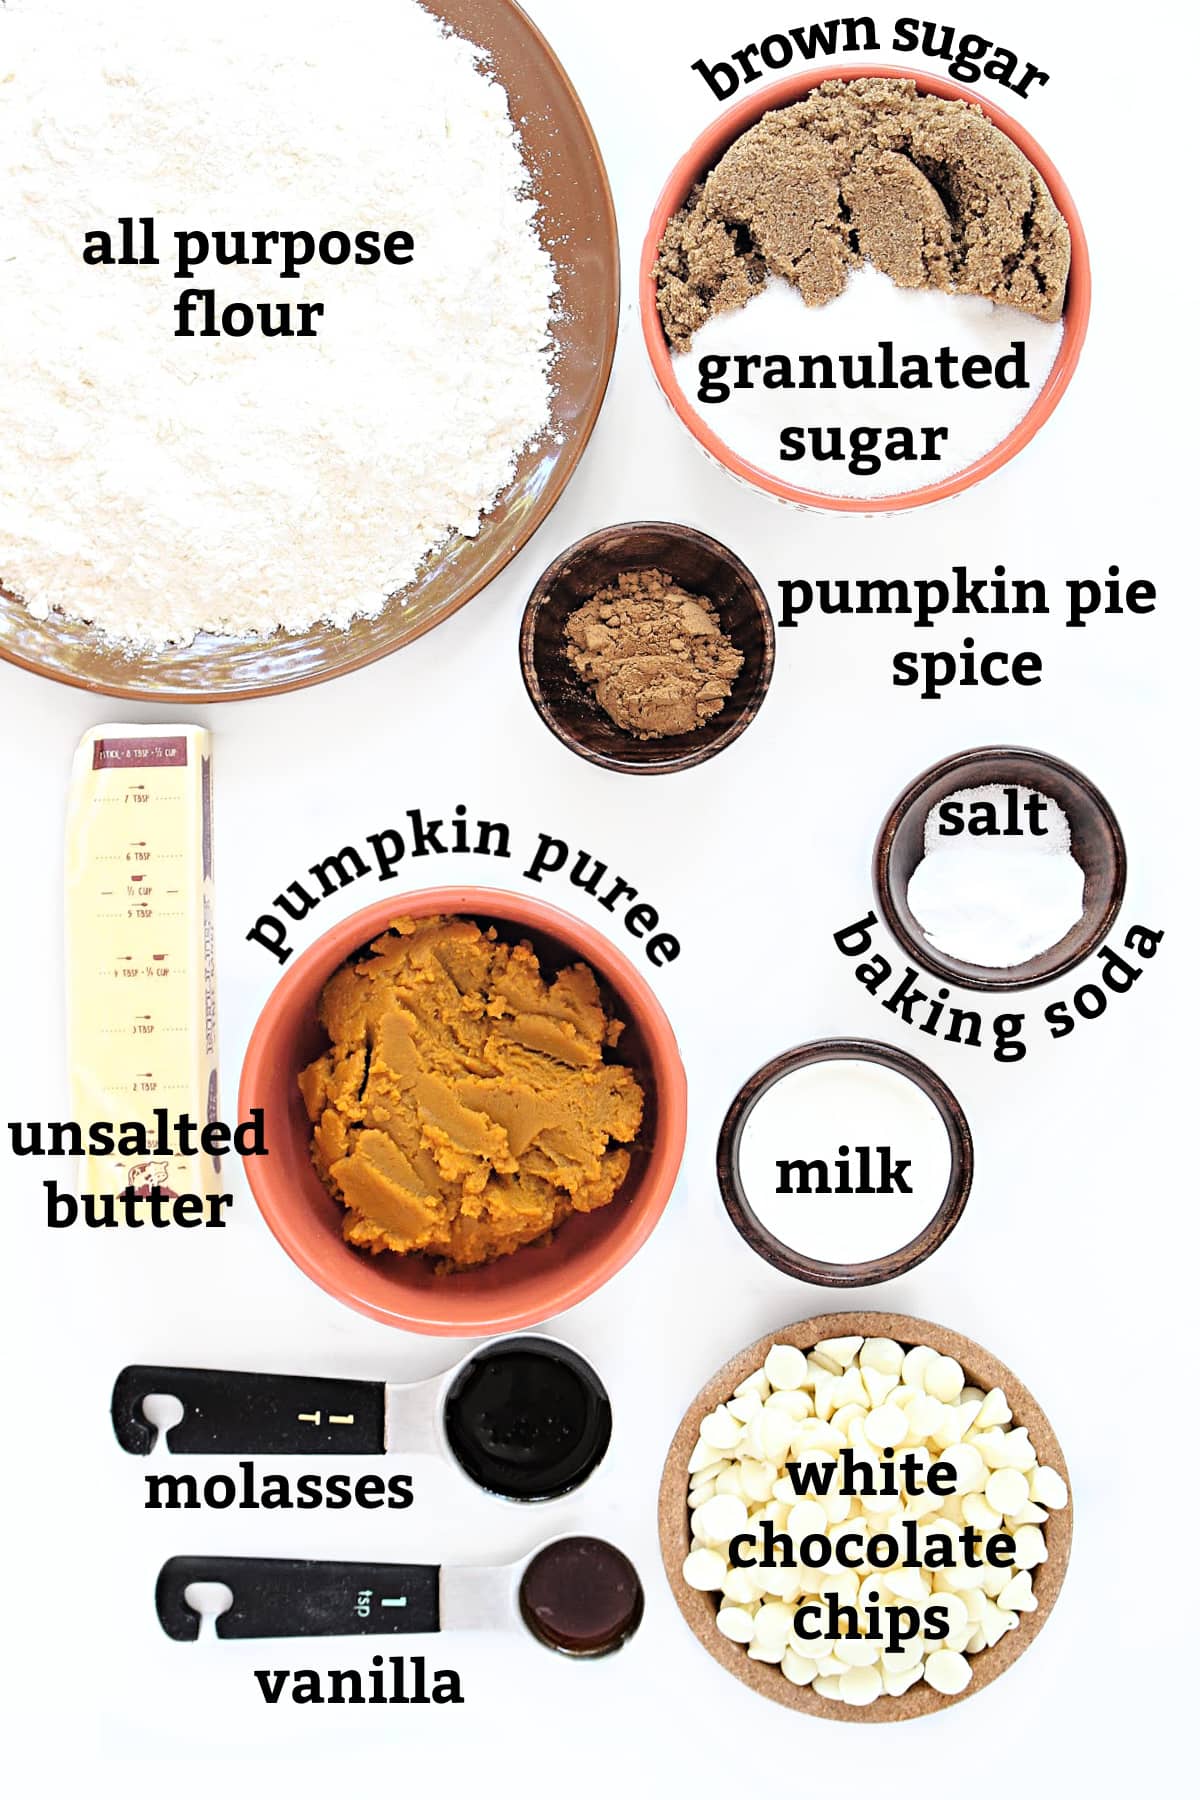 Ingredients: flour, sugars, pumpkin spice, butter, pumpkin puree, salt, baking soda, milk, molasses, vanilla, white  chips.